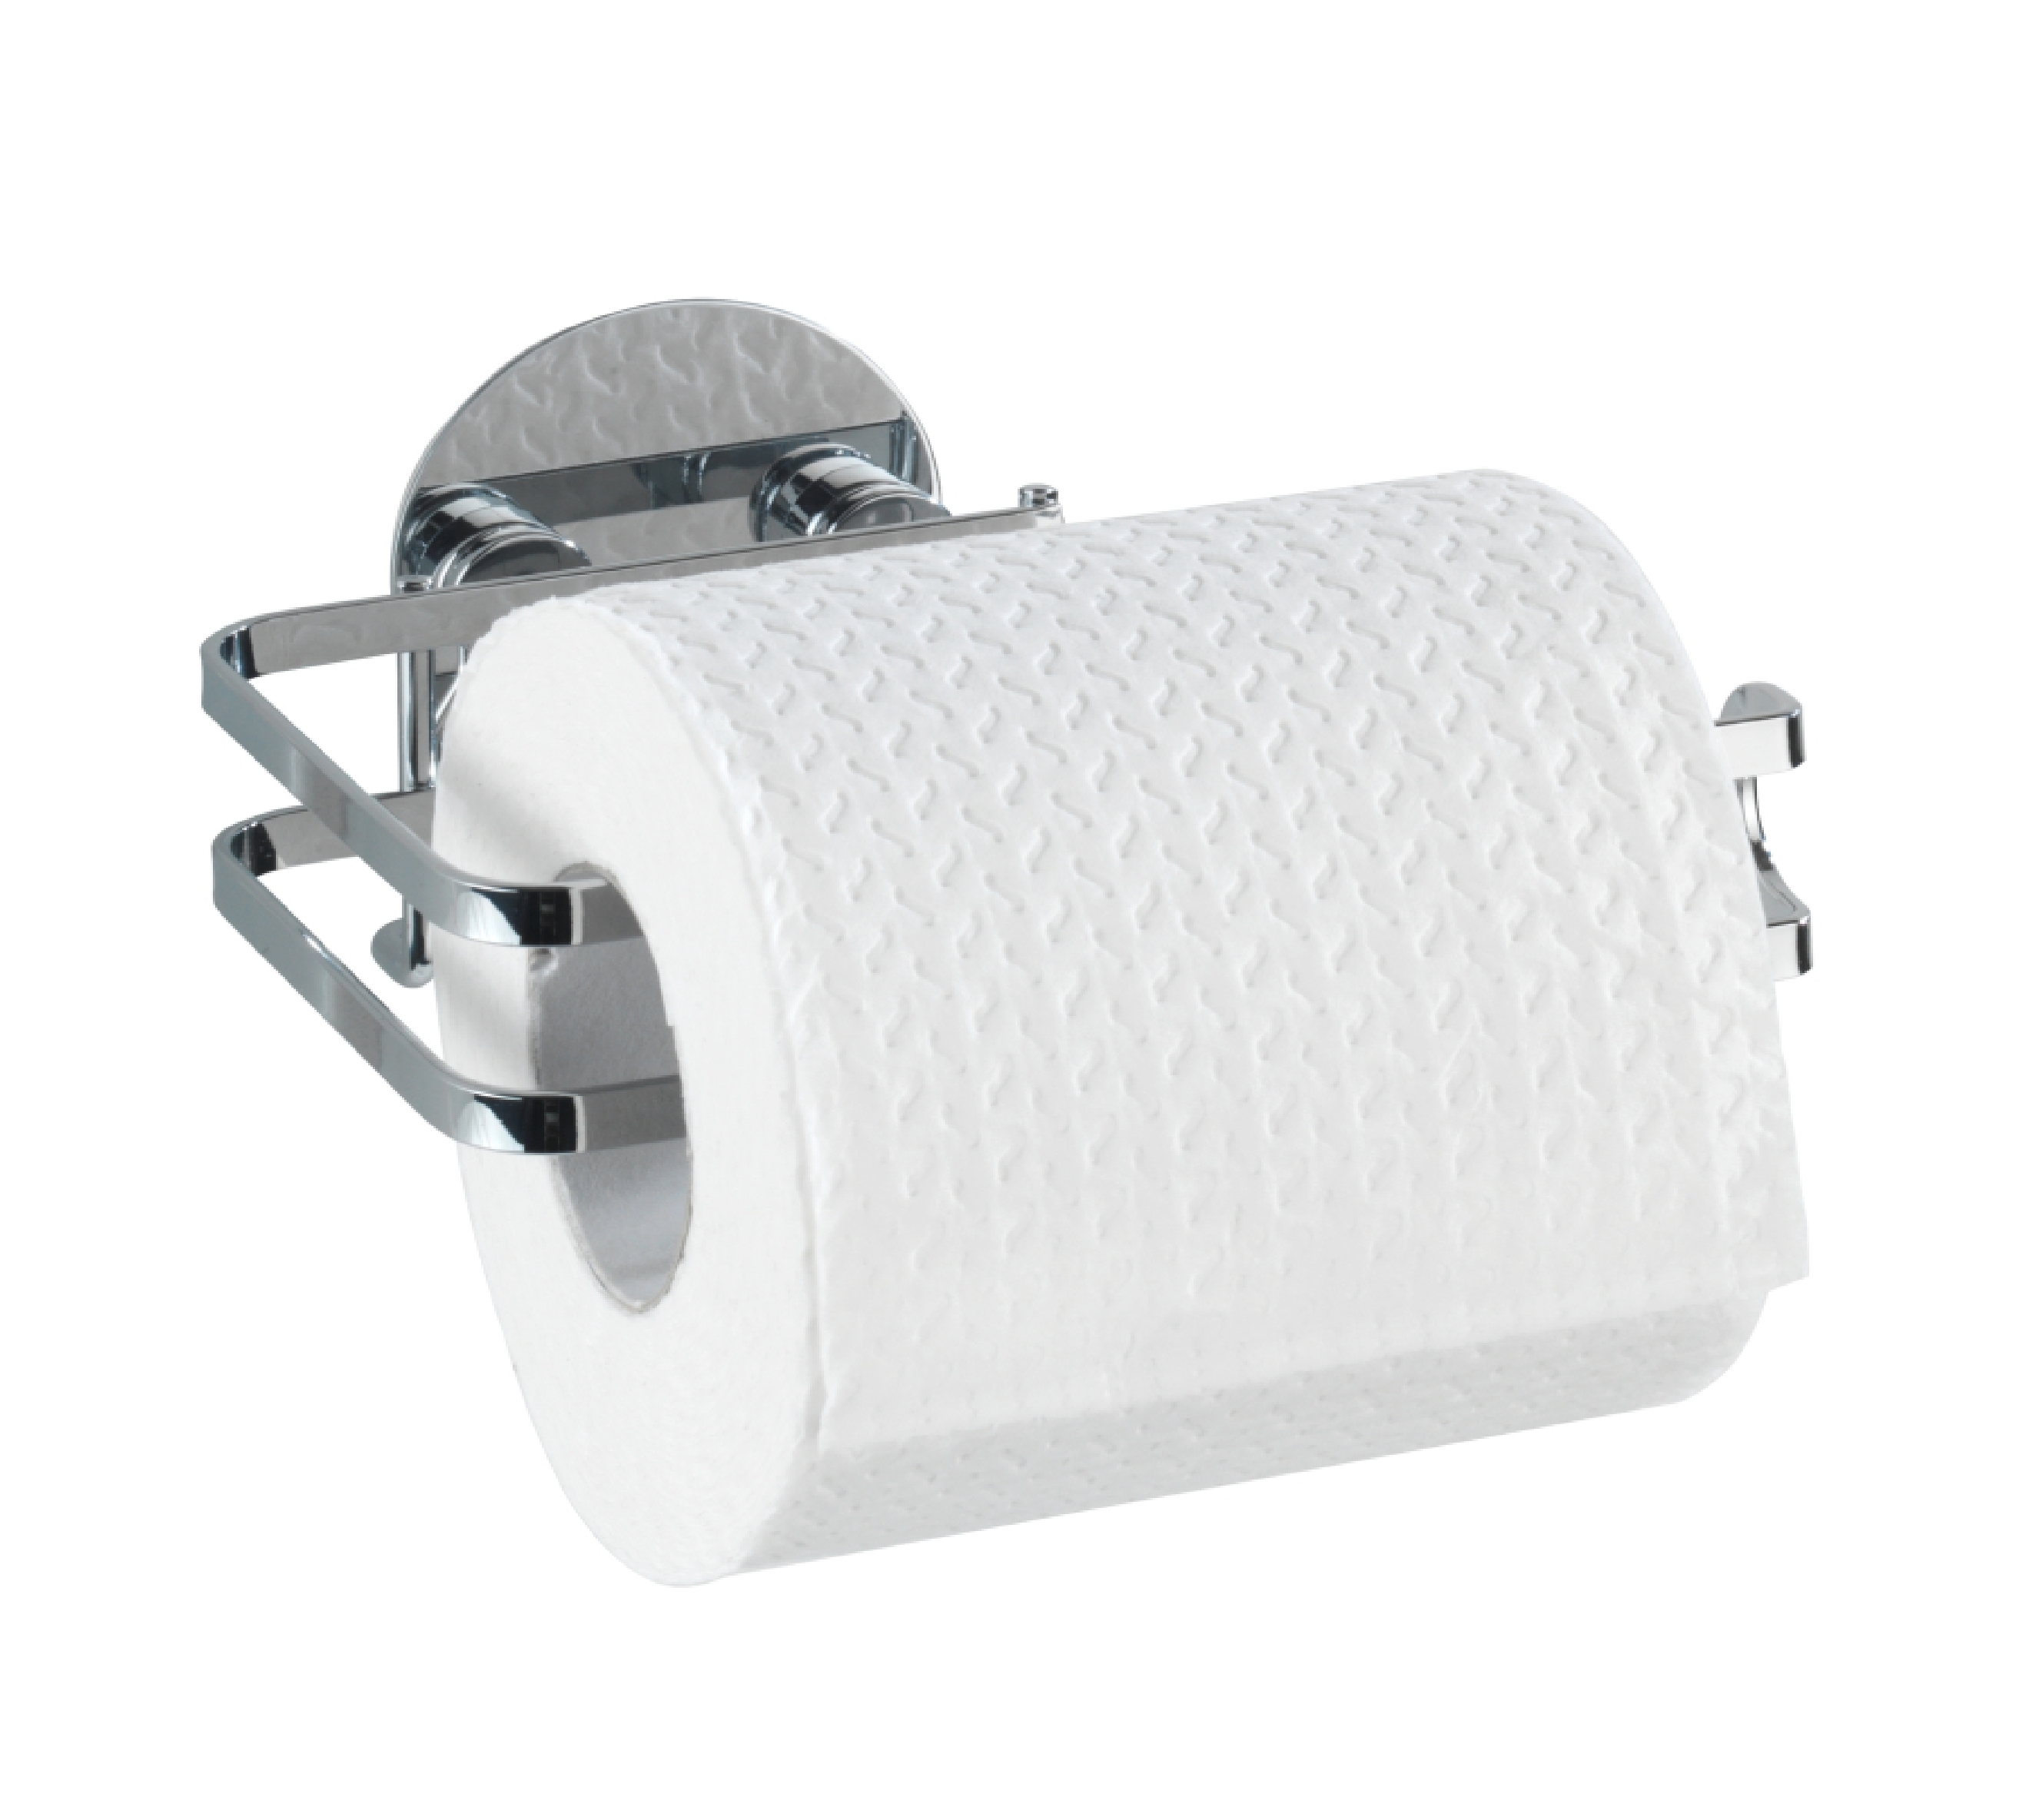 Turbo-Loc Toilettenpapierhalter, Edelstahl, bis 40 kg belastbar WENKO